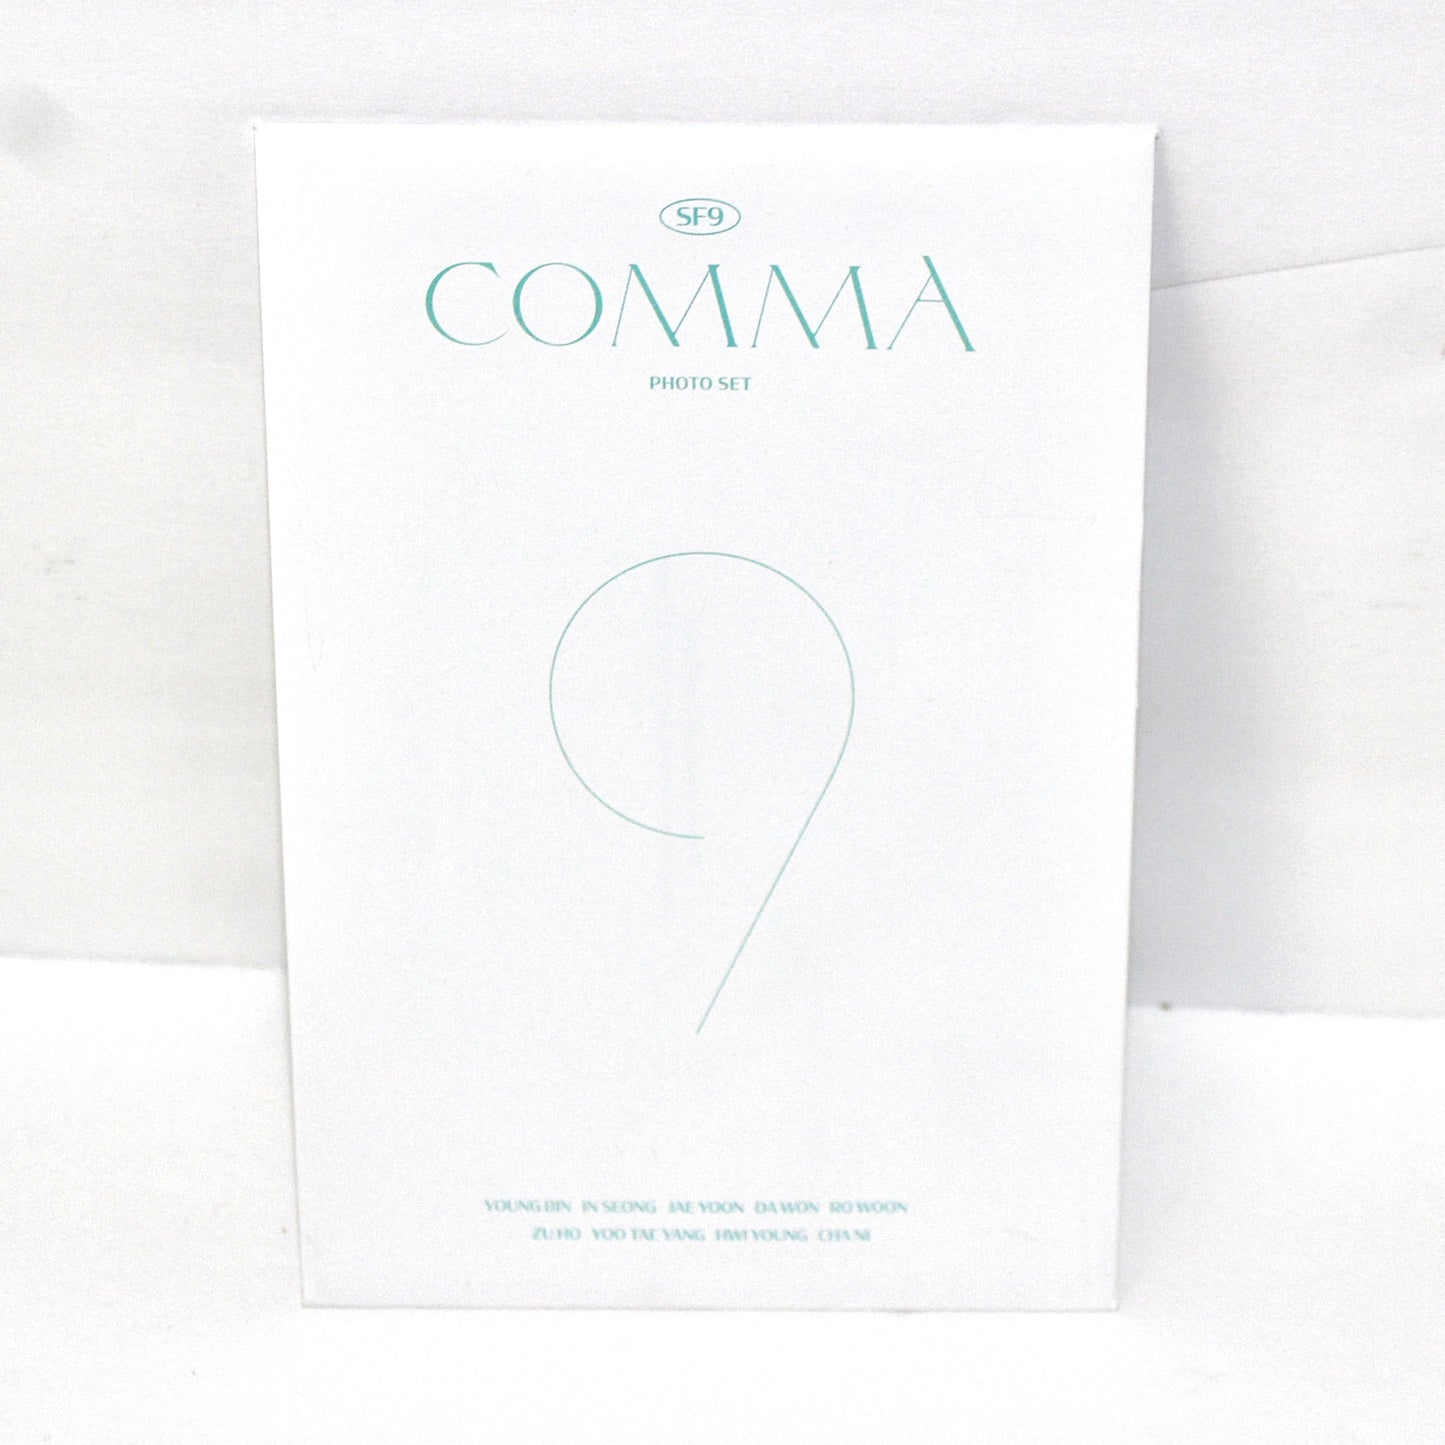 SF9 2nd Photo Book: Comma | Merch